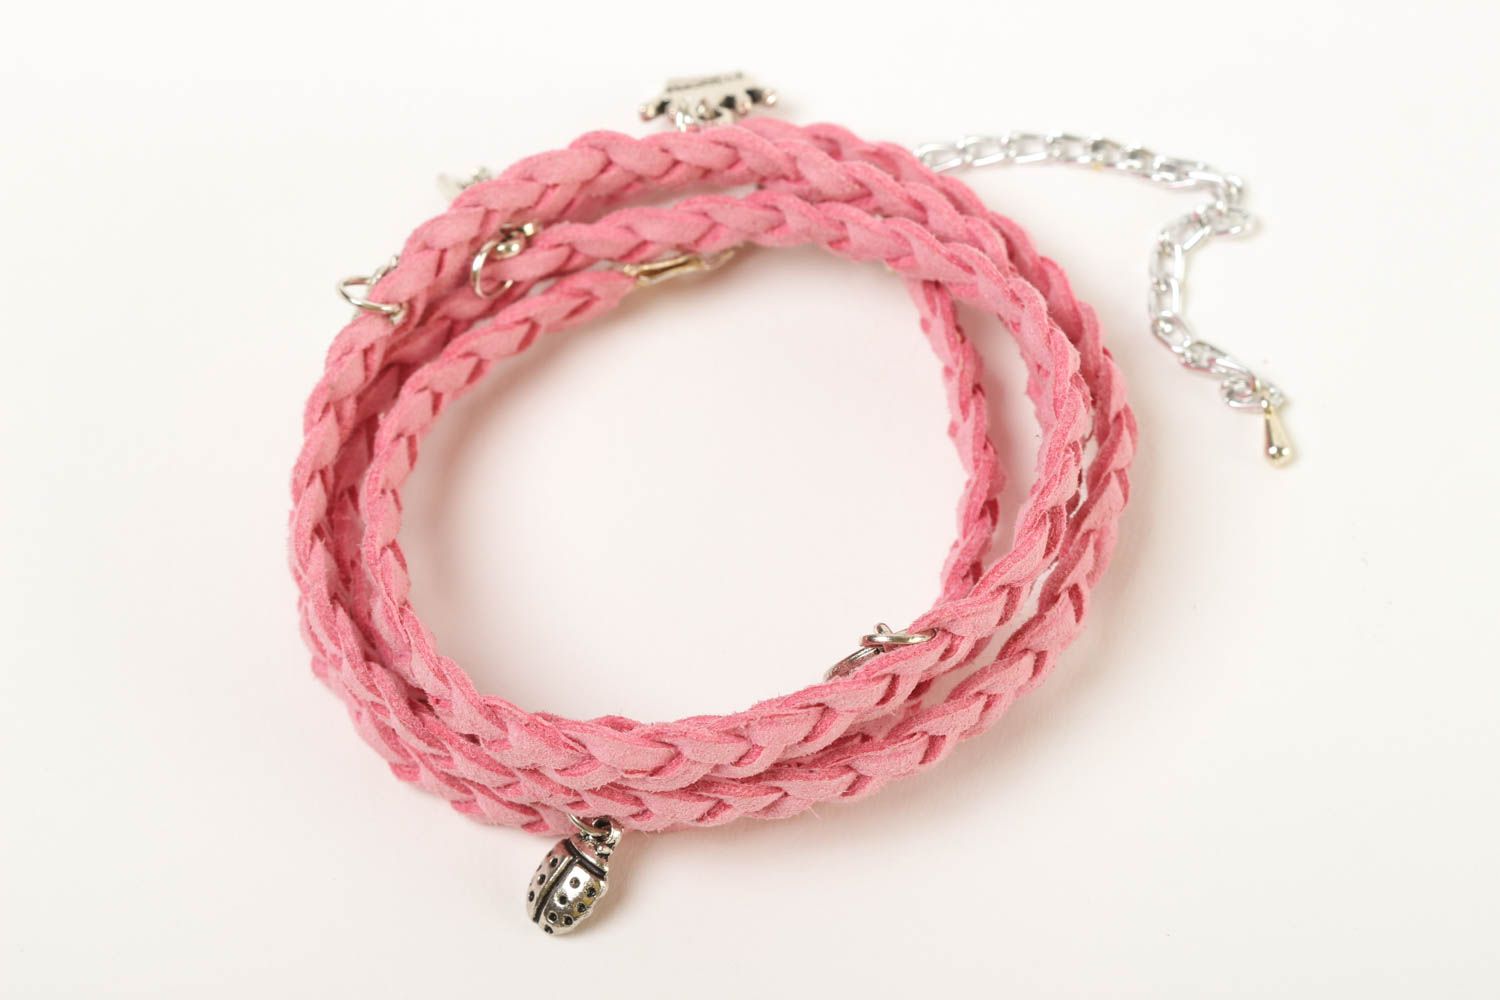 Unusual handmade leather bracelet braided cord bracelet leather goods for girls photo 2